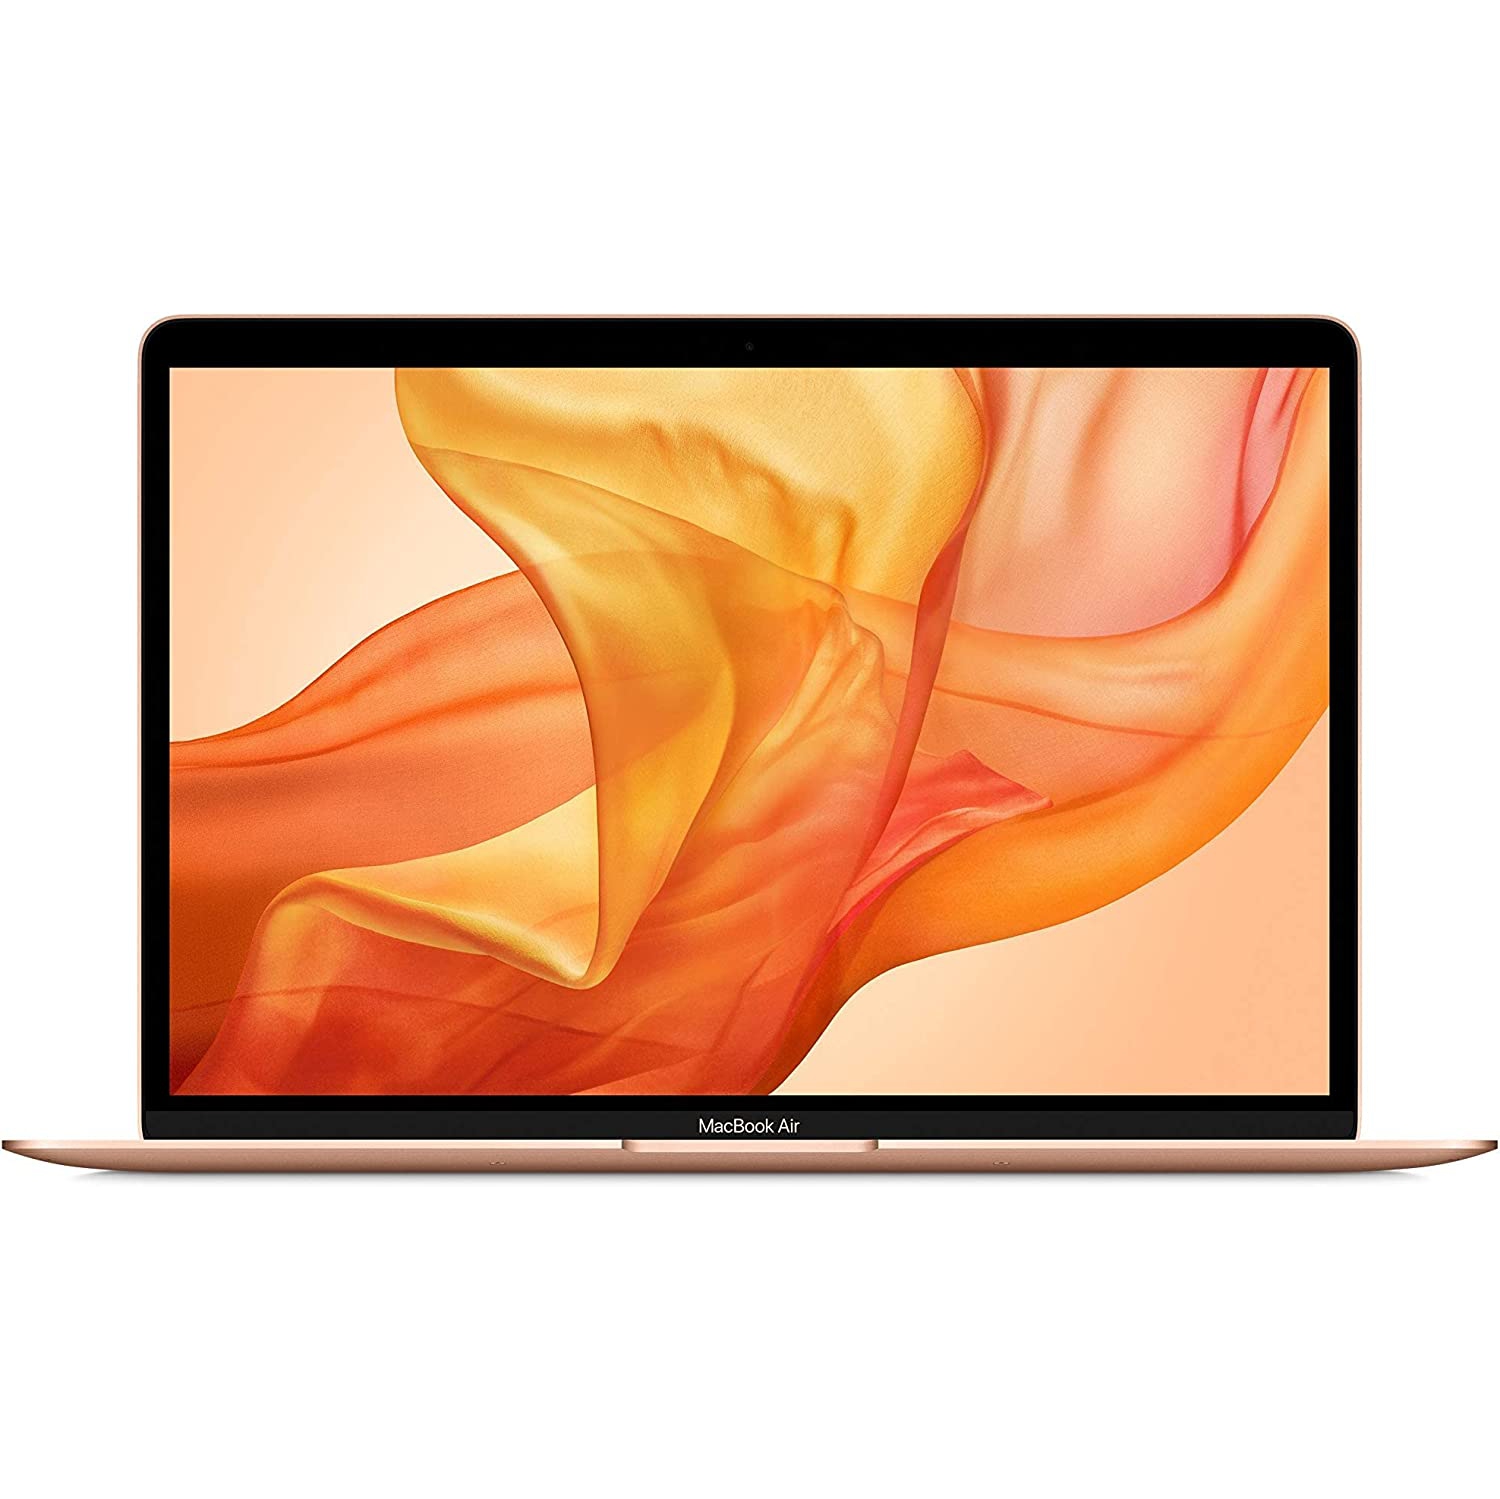 Apple MacBook Air (13-inch, 1.1GHz Dual-core 10th-Generation Intel Core i3 Processor, 8GB RAM, 128GB) - Gold MYE72/LLA